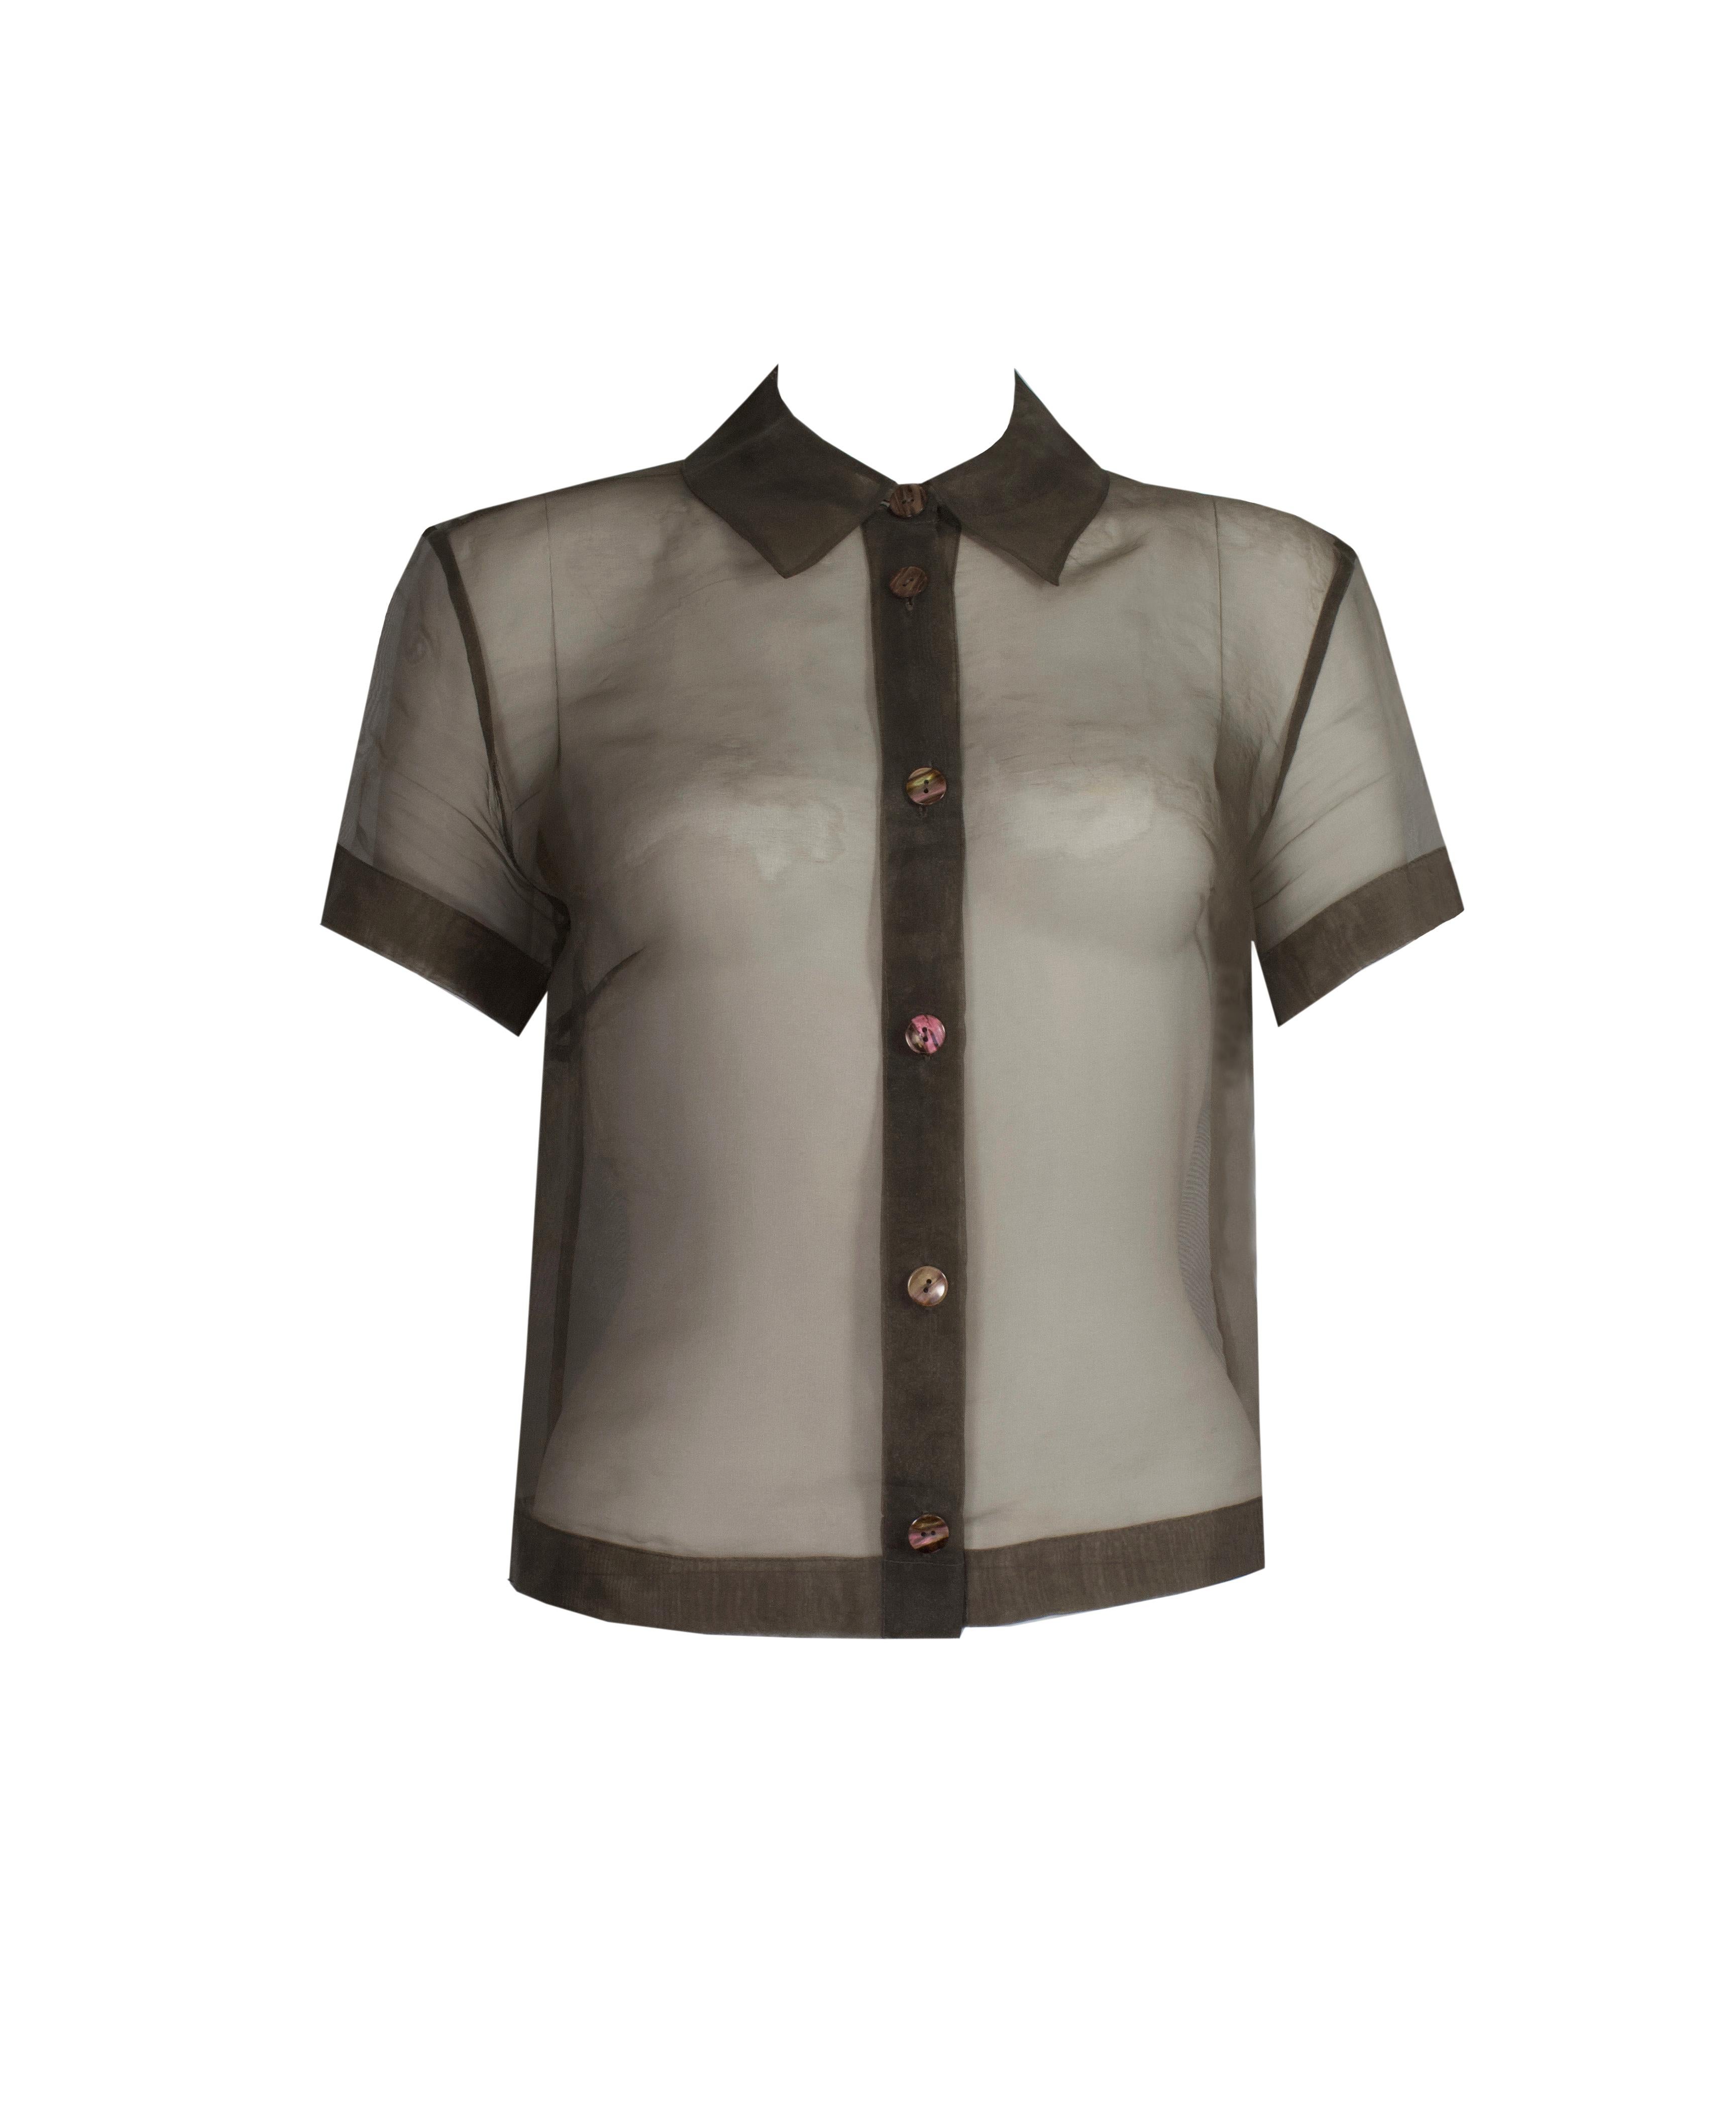 Women's 1980s Vintage - ‘Art Impressions’ - Chiffon Shirt - RARE - Tortoiseshell Buttons